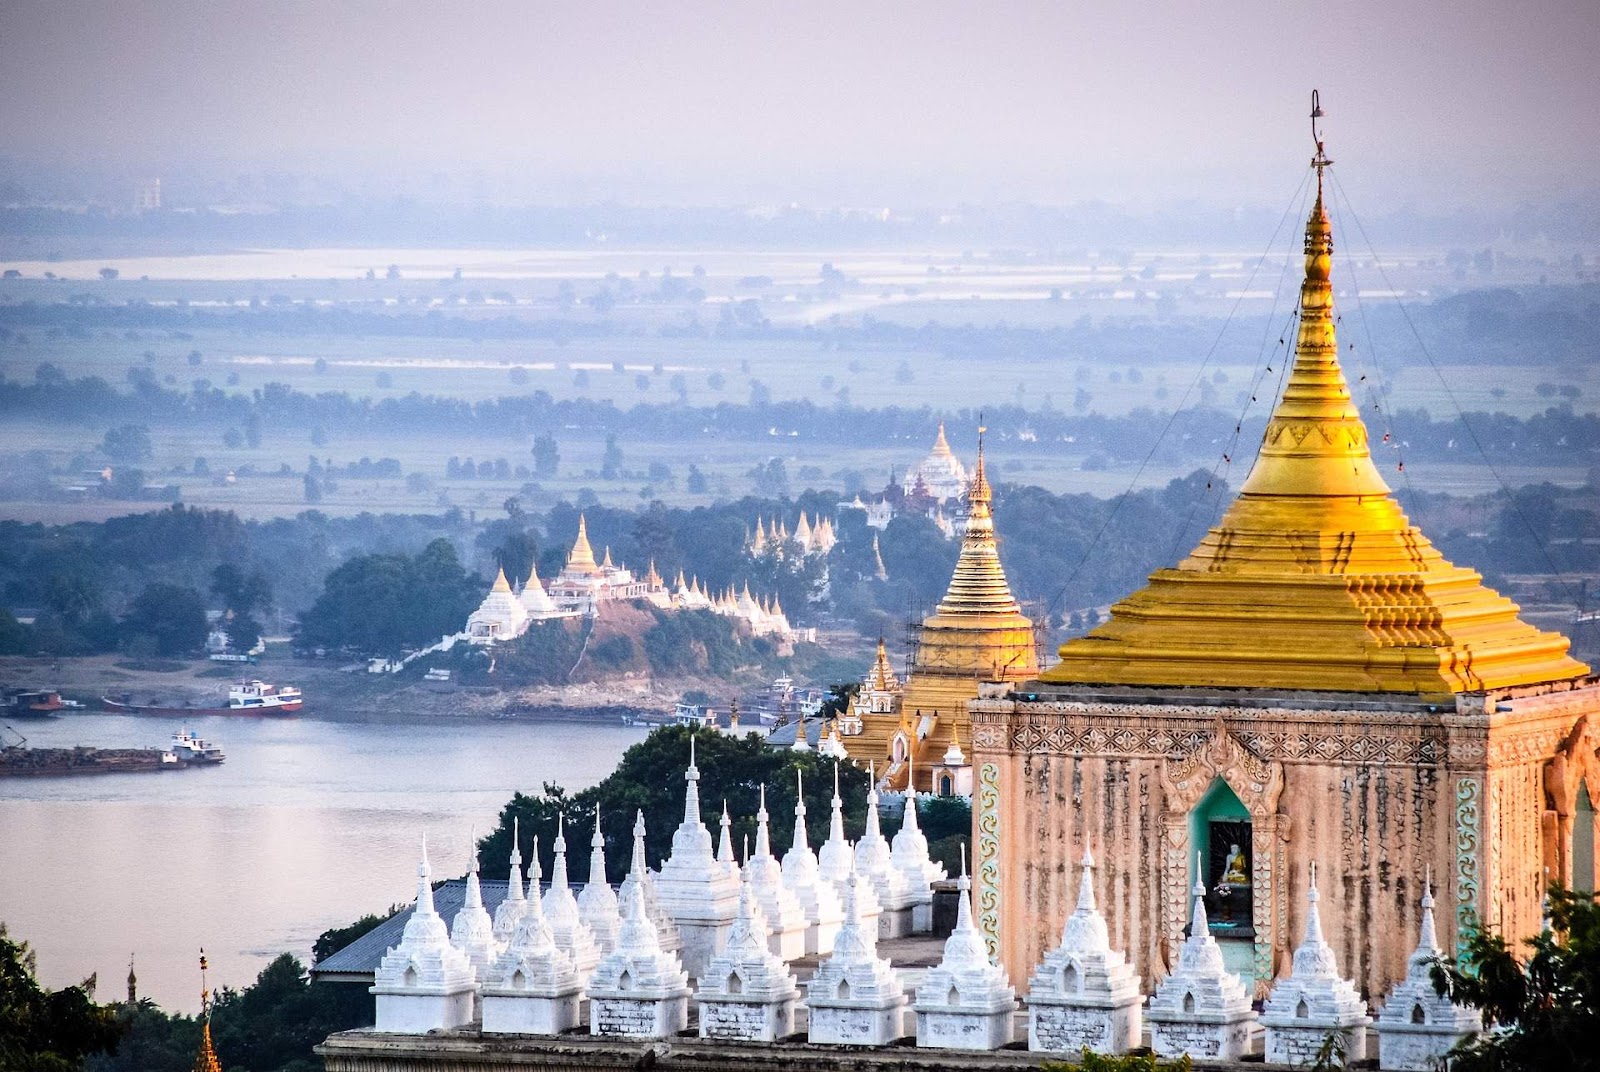 Burma, now known as Myanmar